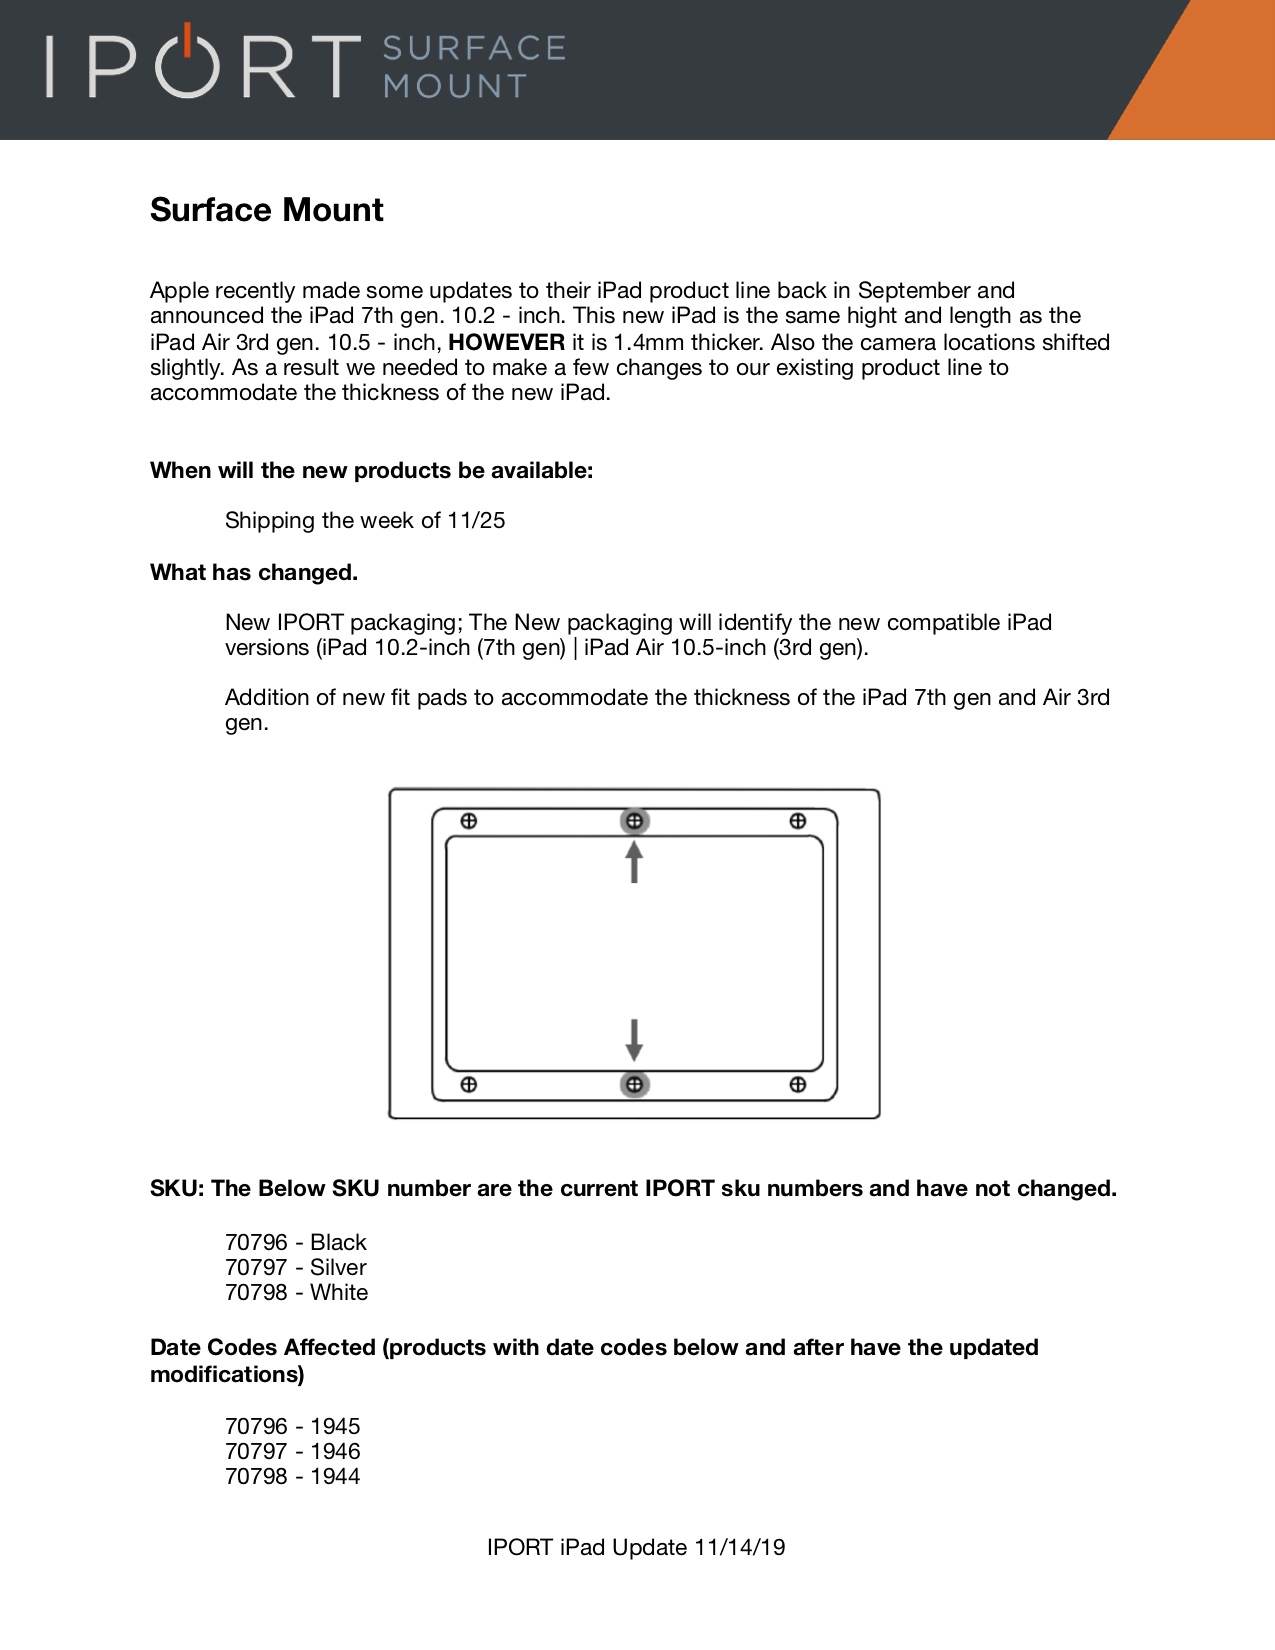 IPORT_Surface_Mount_iPad_Update.jpg